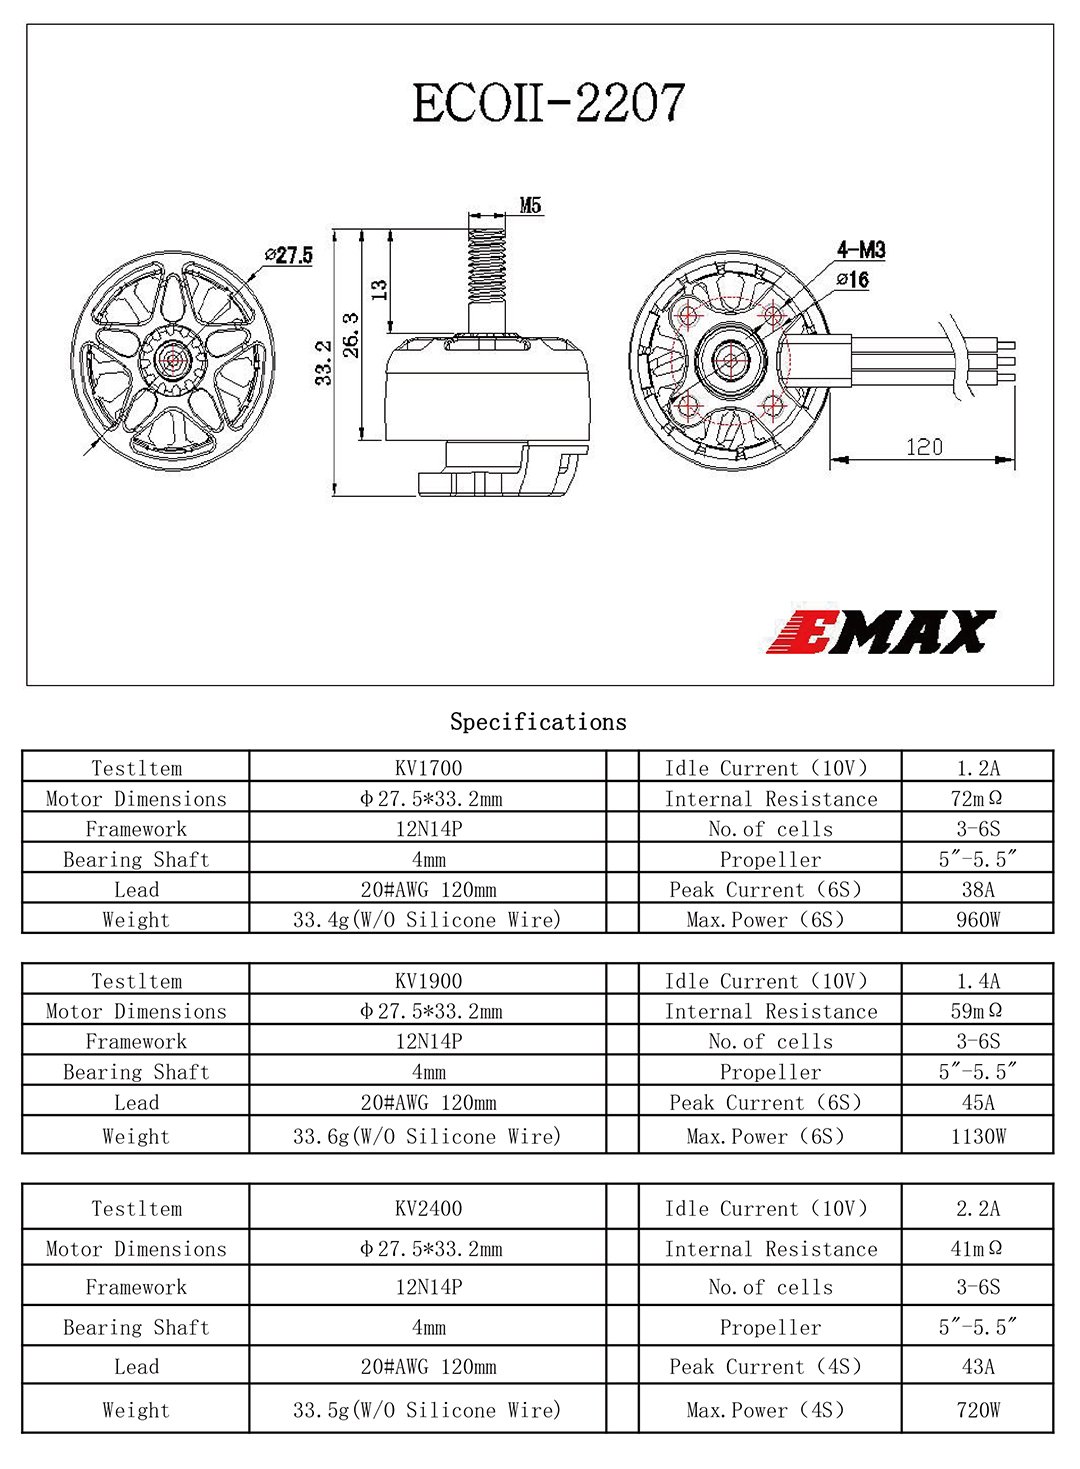 EMAX ECO II Series 2306 FPV Drone Motor - 1700Kv/1900Kv/2400Kv 16 - Emax